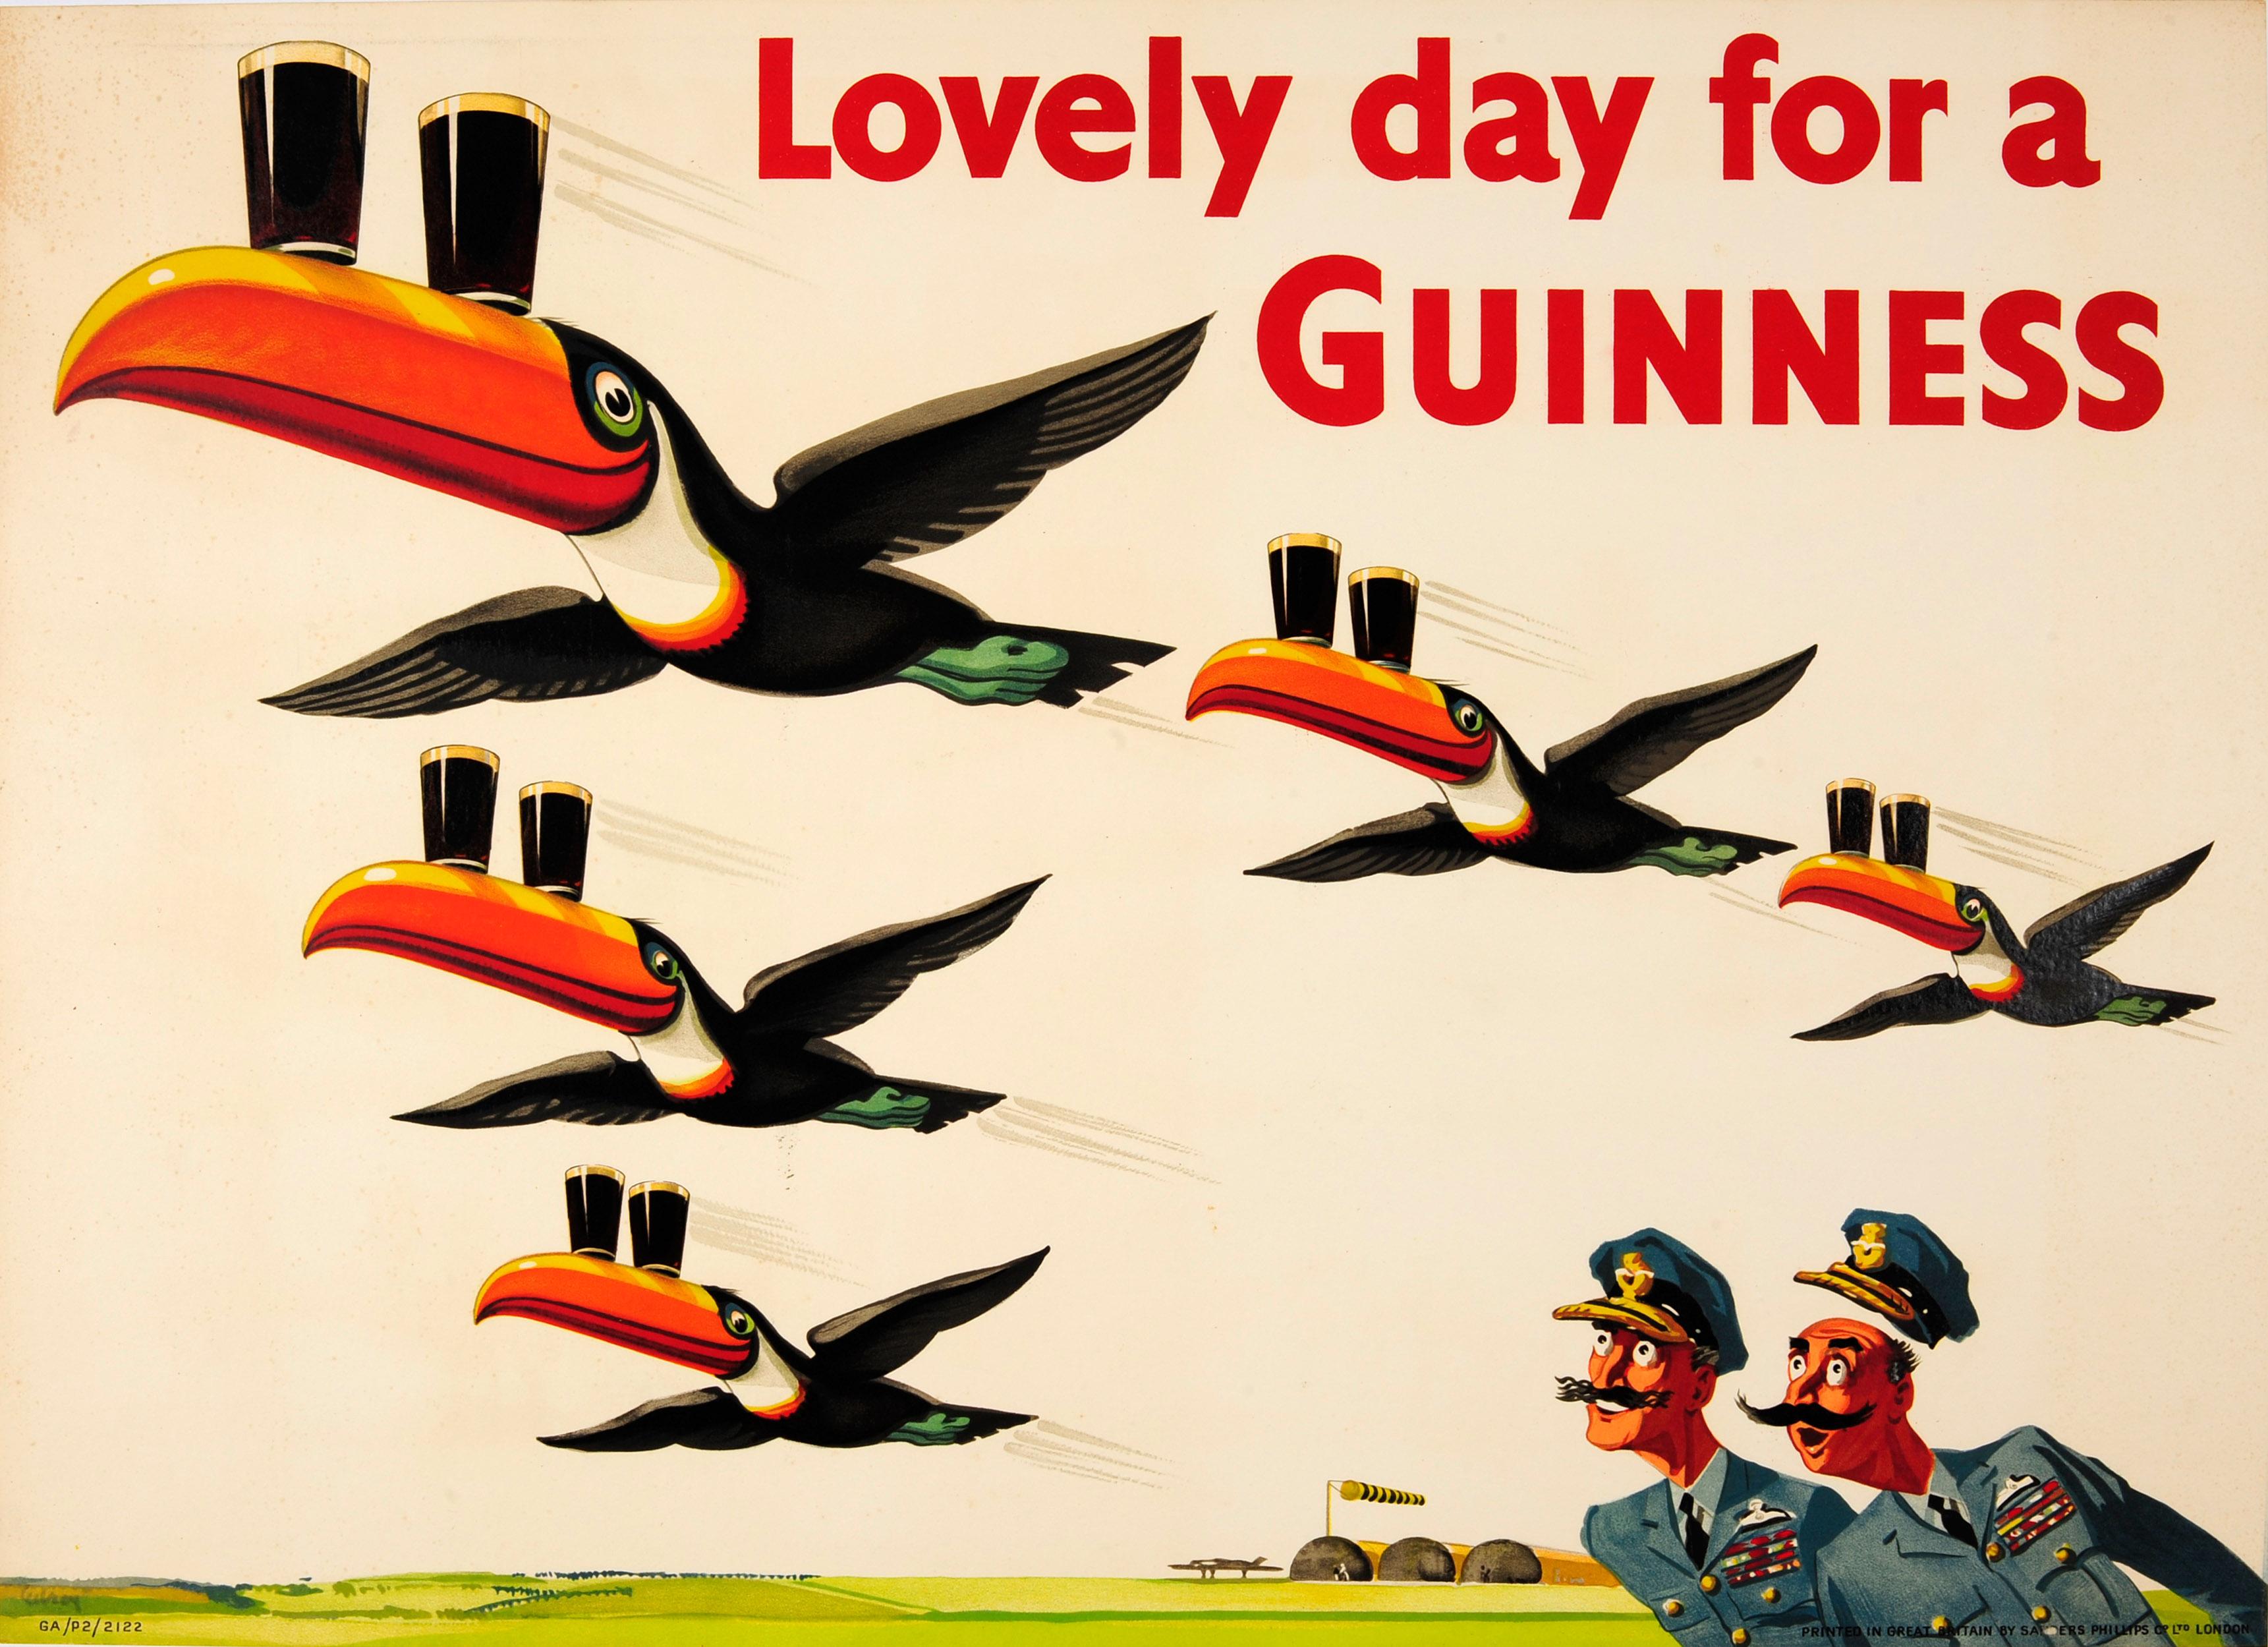 John Gilroy Print - Original Vintage Guinness Poster - Lovely Day For A Guinness - RAF Toucan Design